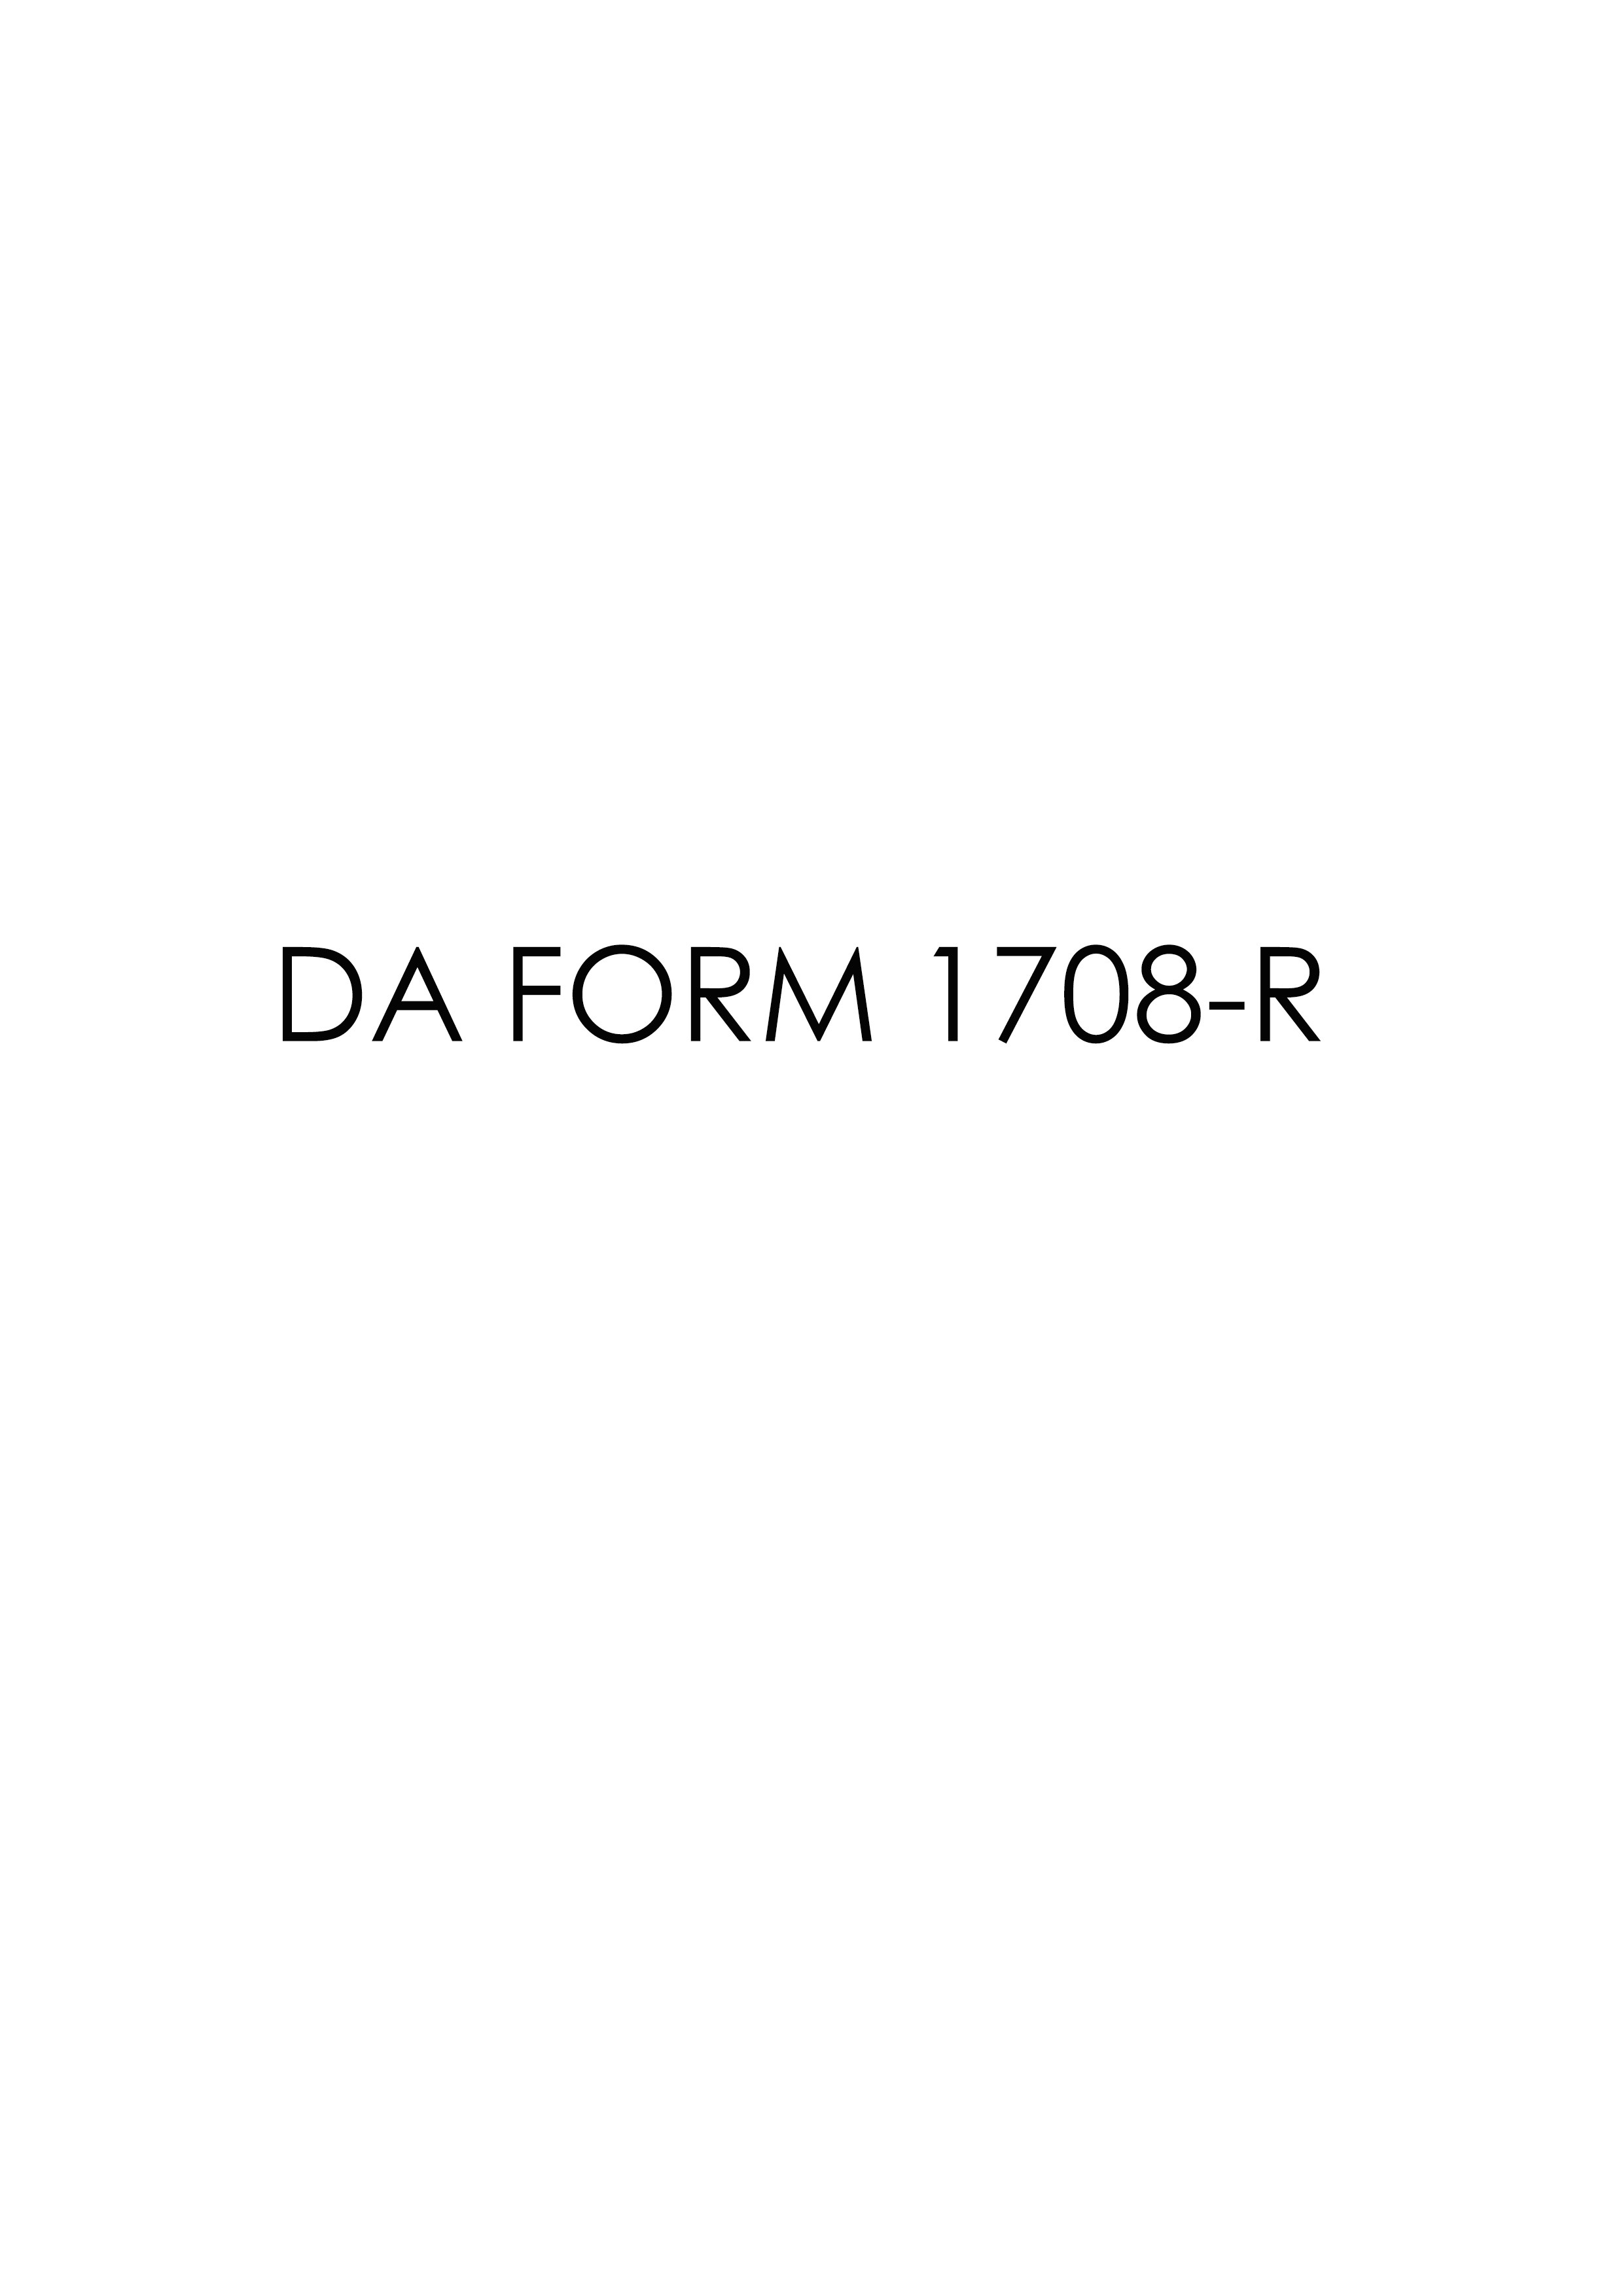 Download da 1708-R Form